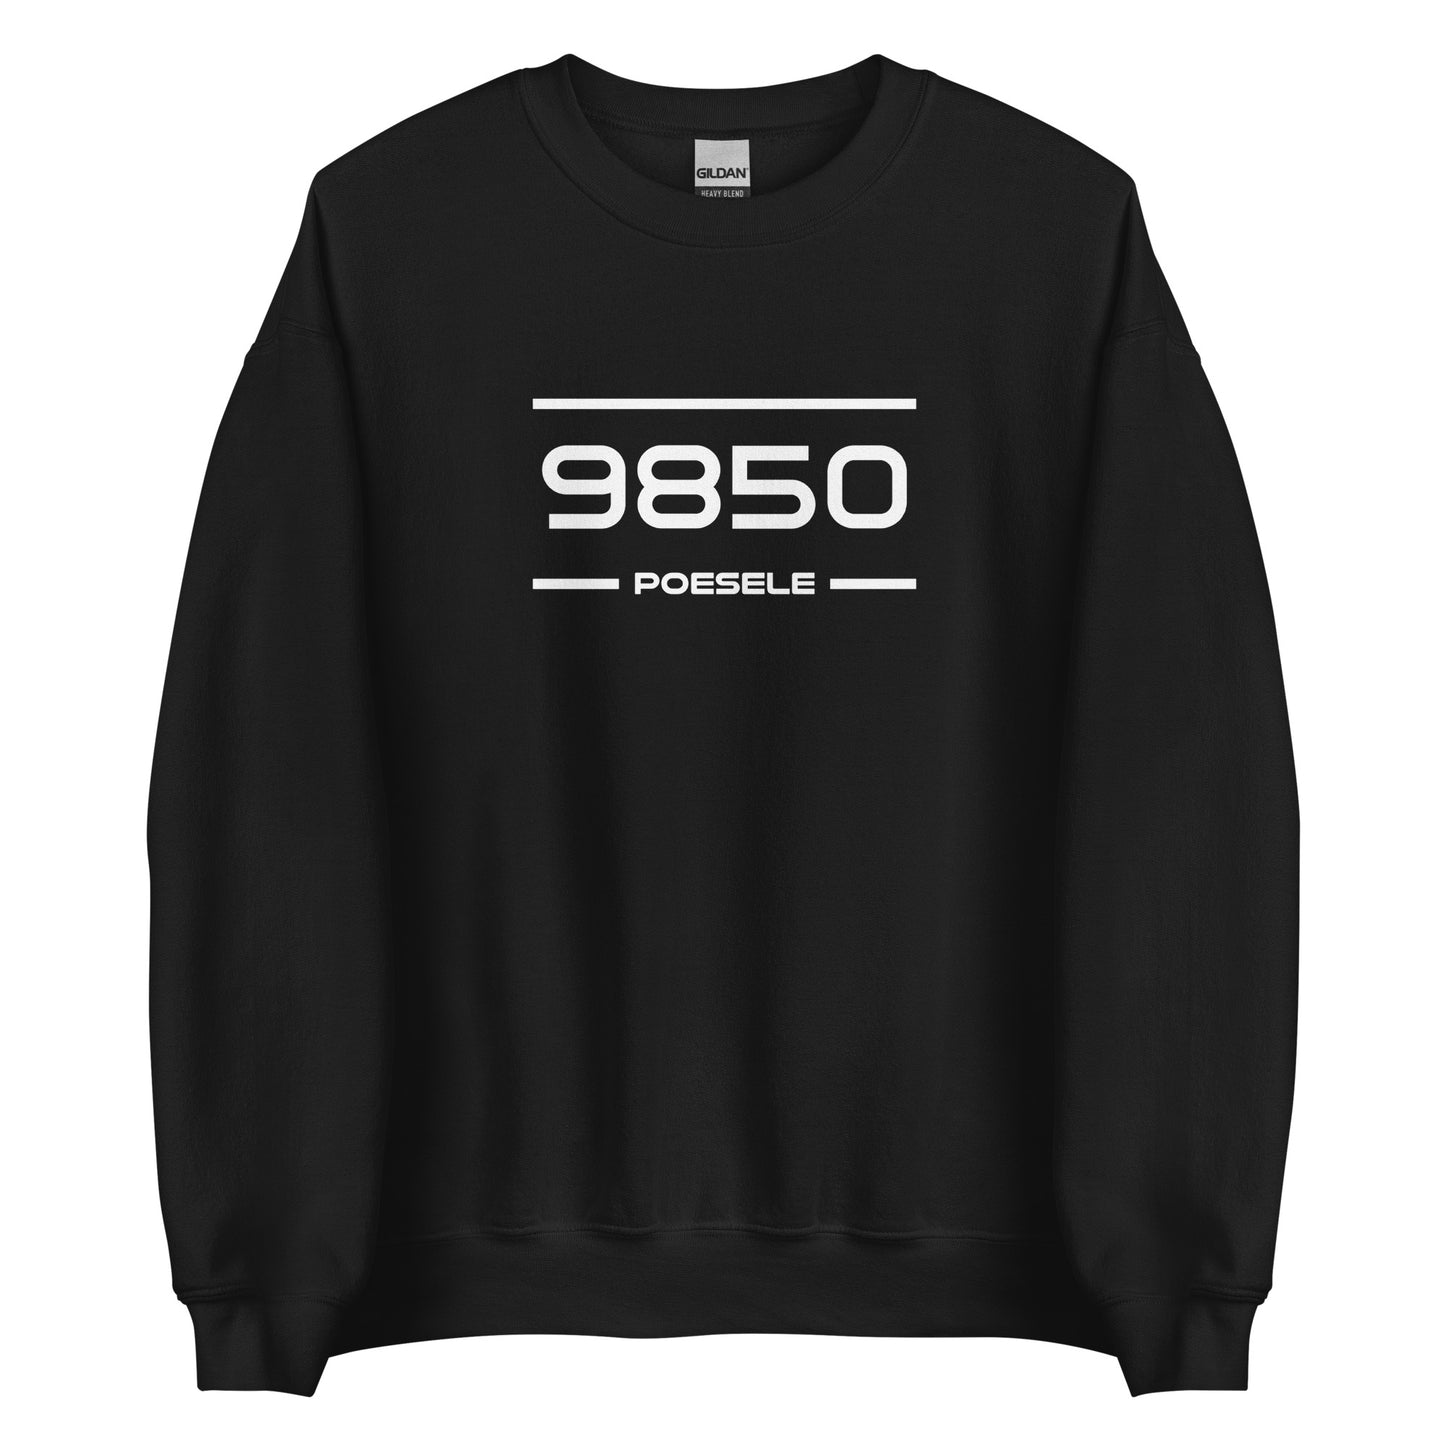 Sweater - 9850 - Poesele (M/V)